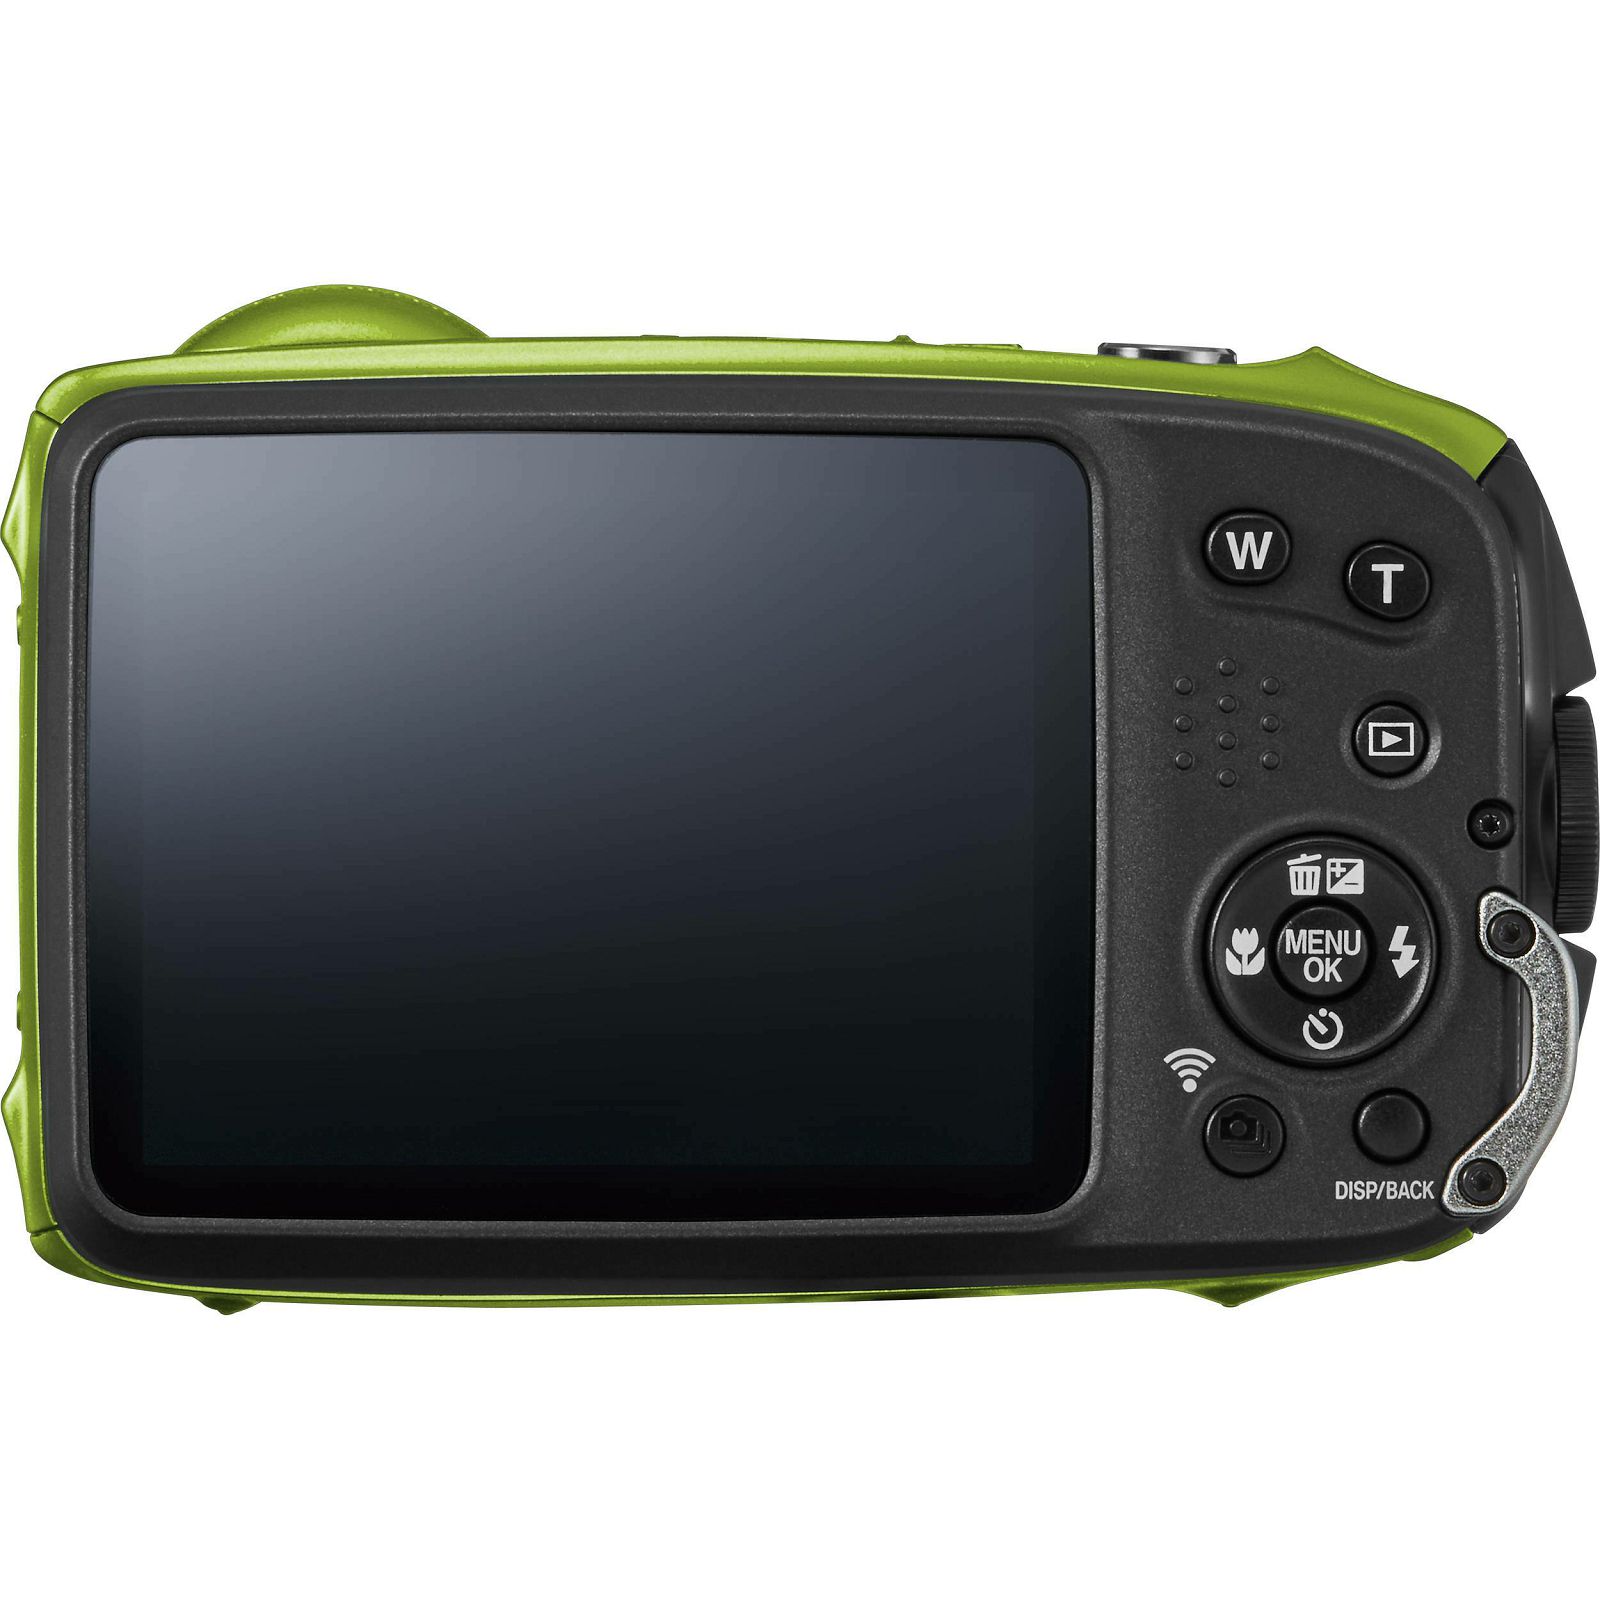 Fujifilm FinePix XP120 Lime Black Fuji XP-120 zeleno crni vodootporni podvodni digitalni fotoaparat WiFi remote 5x zoom 16.4Mpx 28mm BSI-CMOS sensor Digital camera